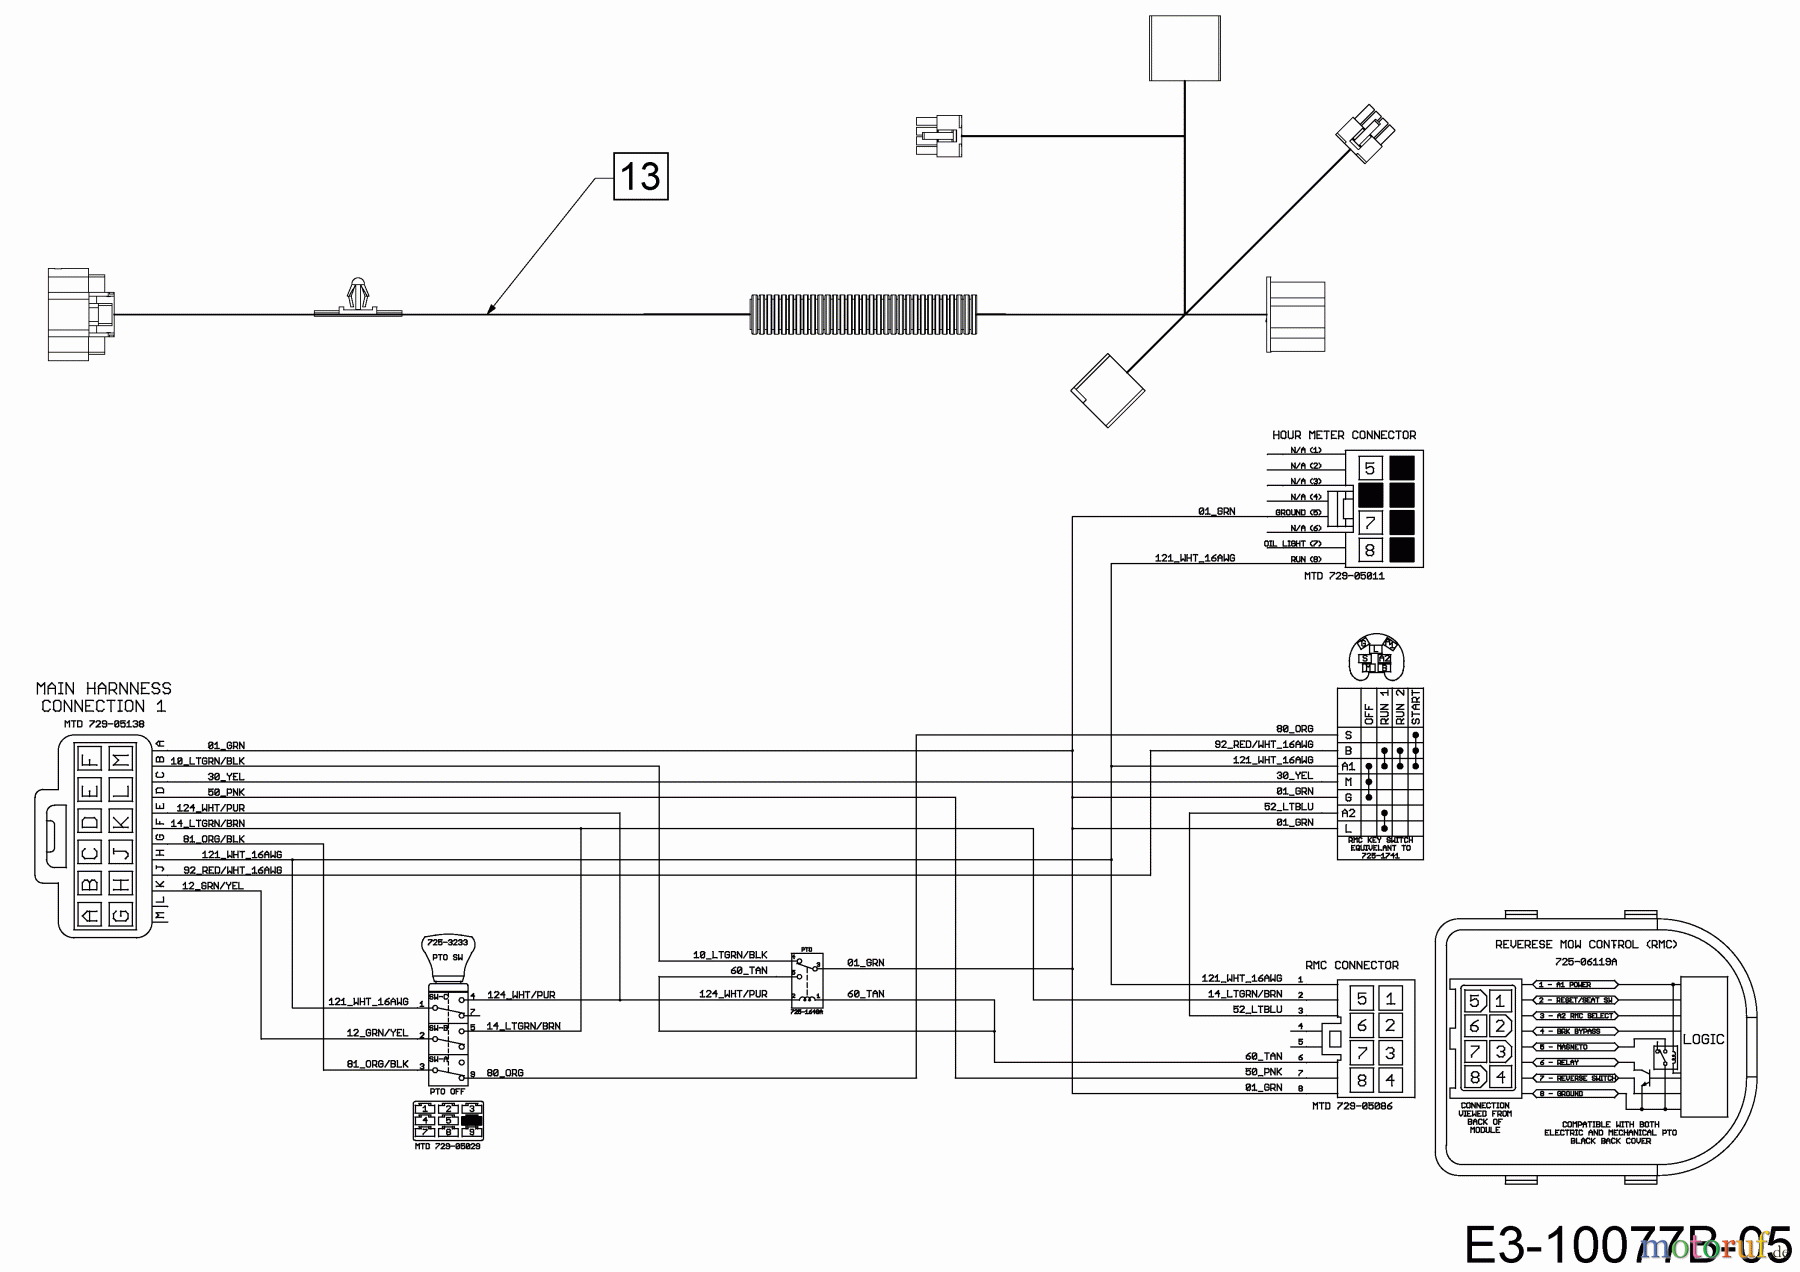  Black Edition Lawn tractors 285-106 TWIN KH 13AIA1KR615  (2018) Wiring diagram dashboard